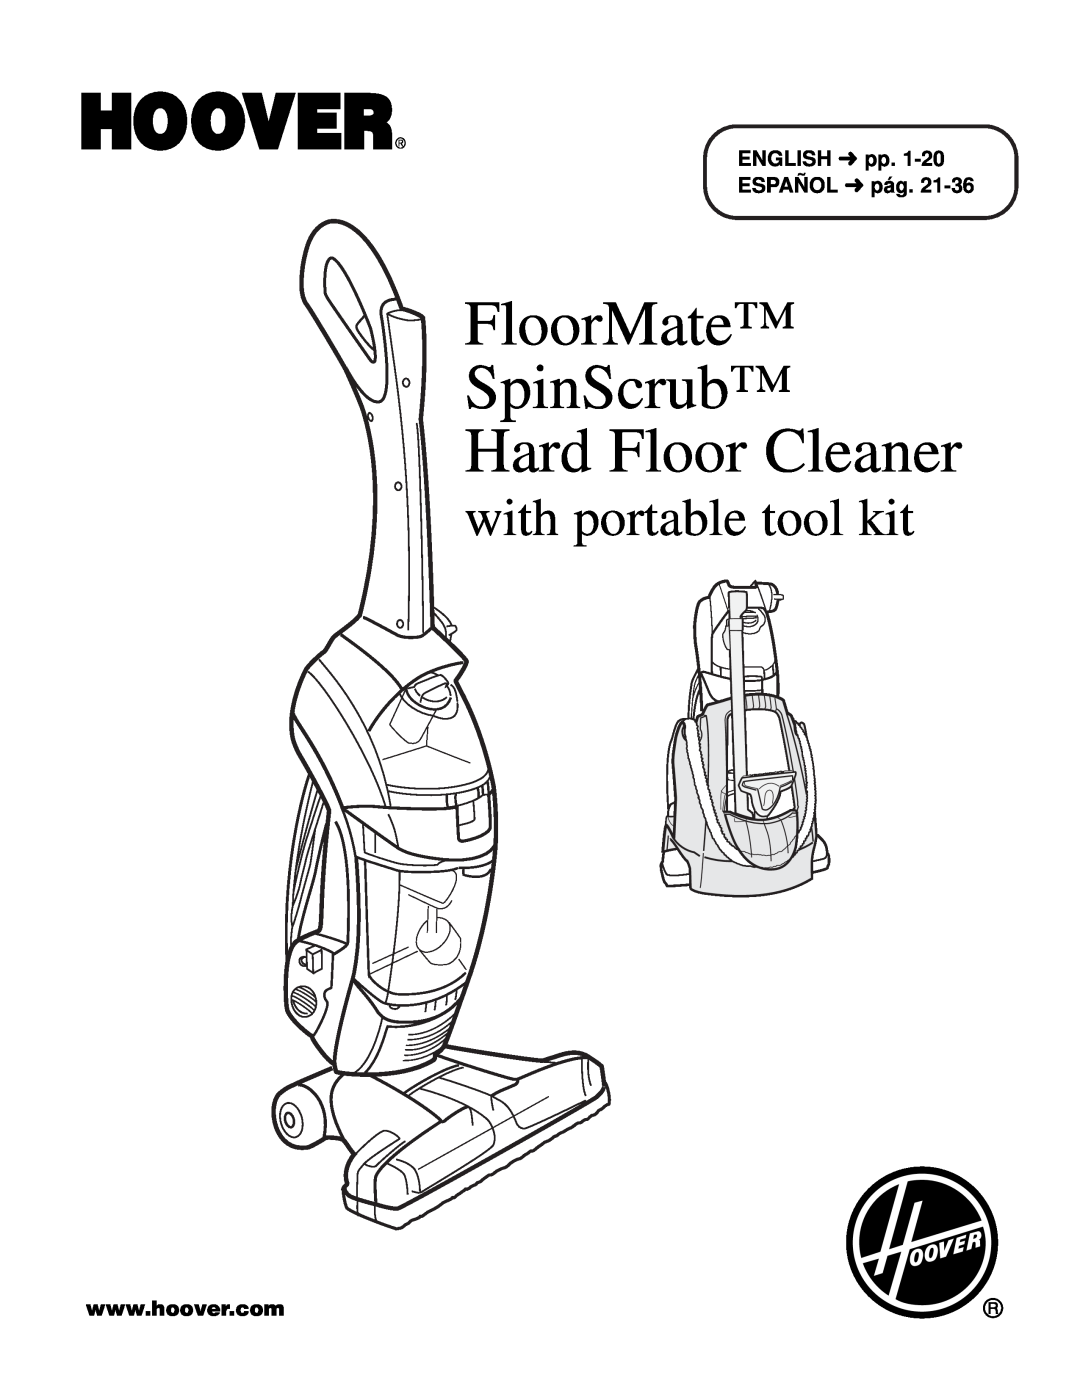 Hoover Floor Mate SpinScrub Hard Floor Cleaner with portable tool kit manual FloorMate SpinScrub Hard Floor Cleaner 